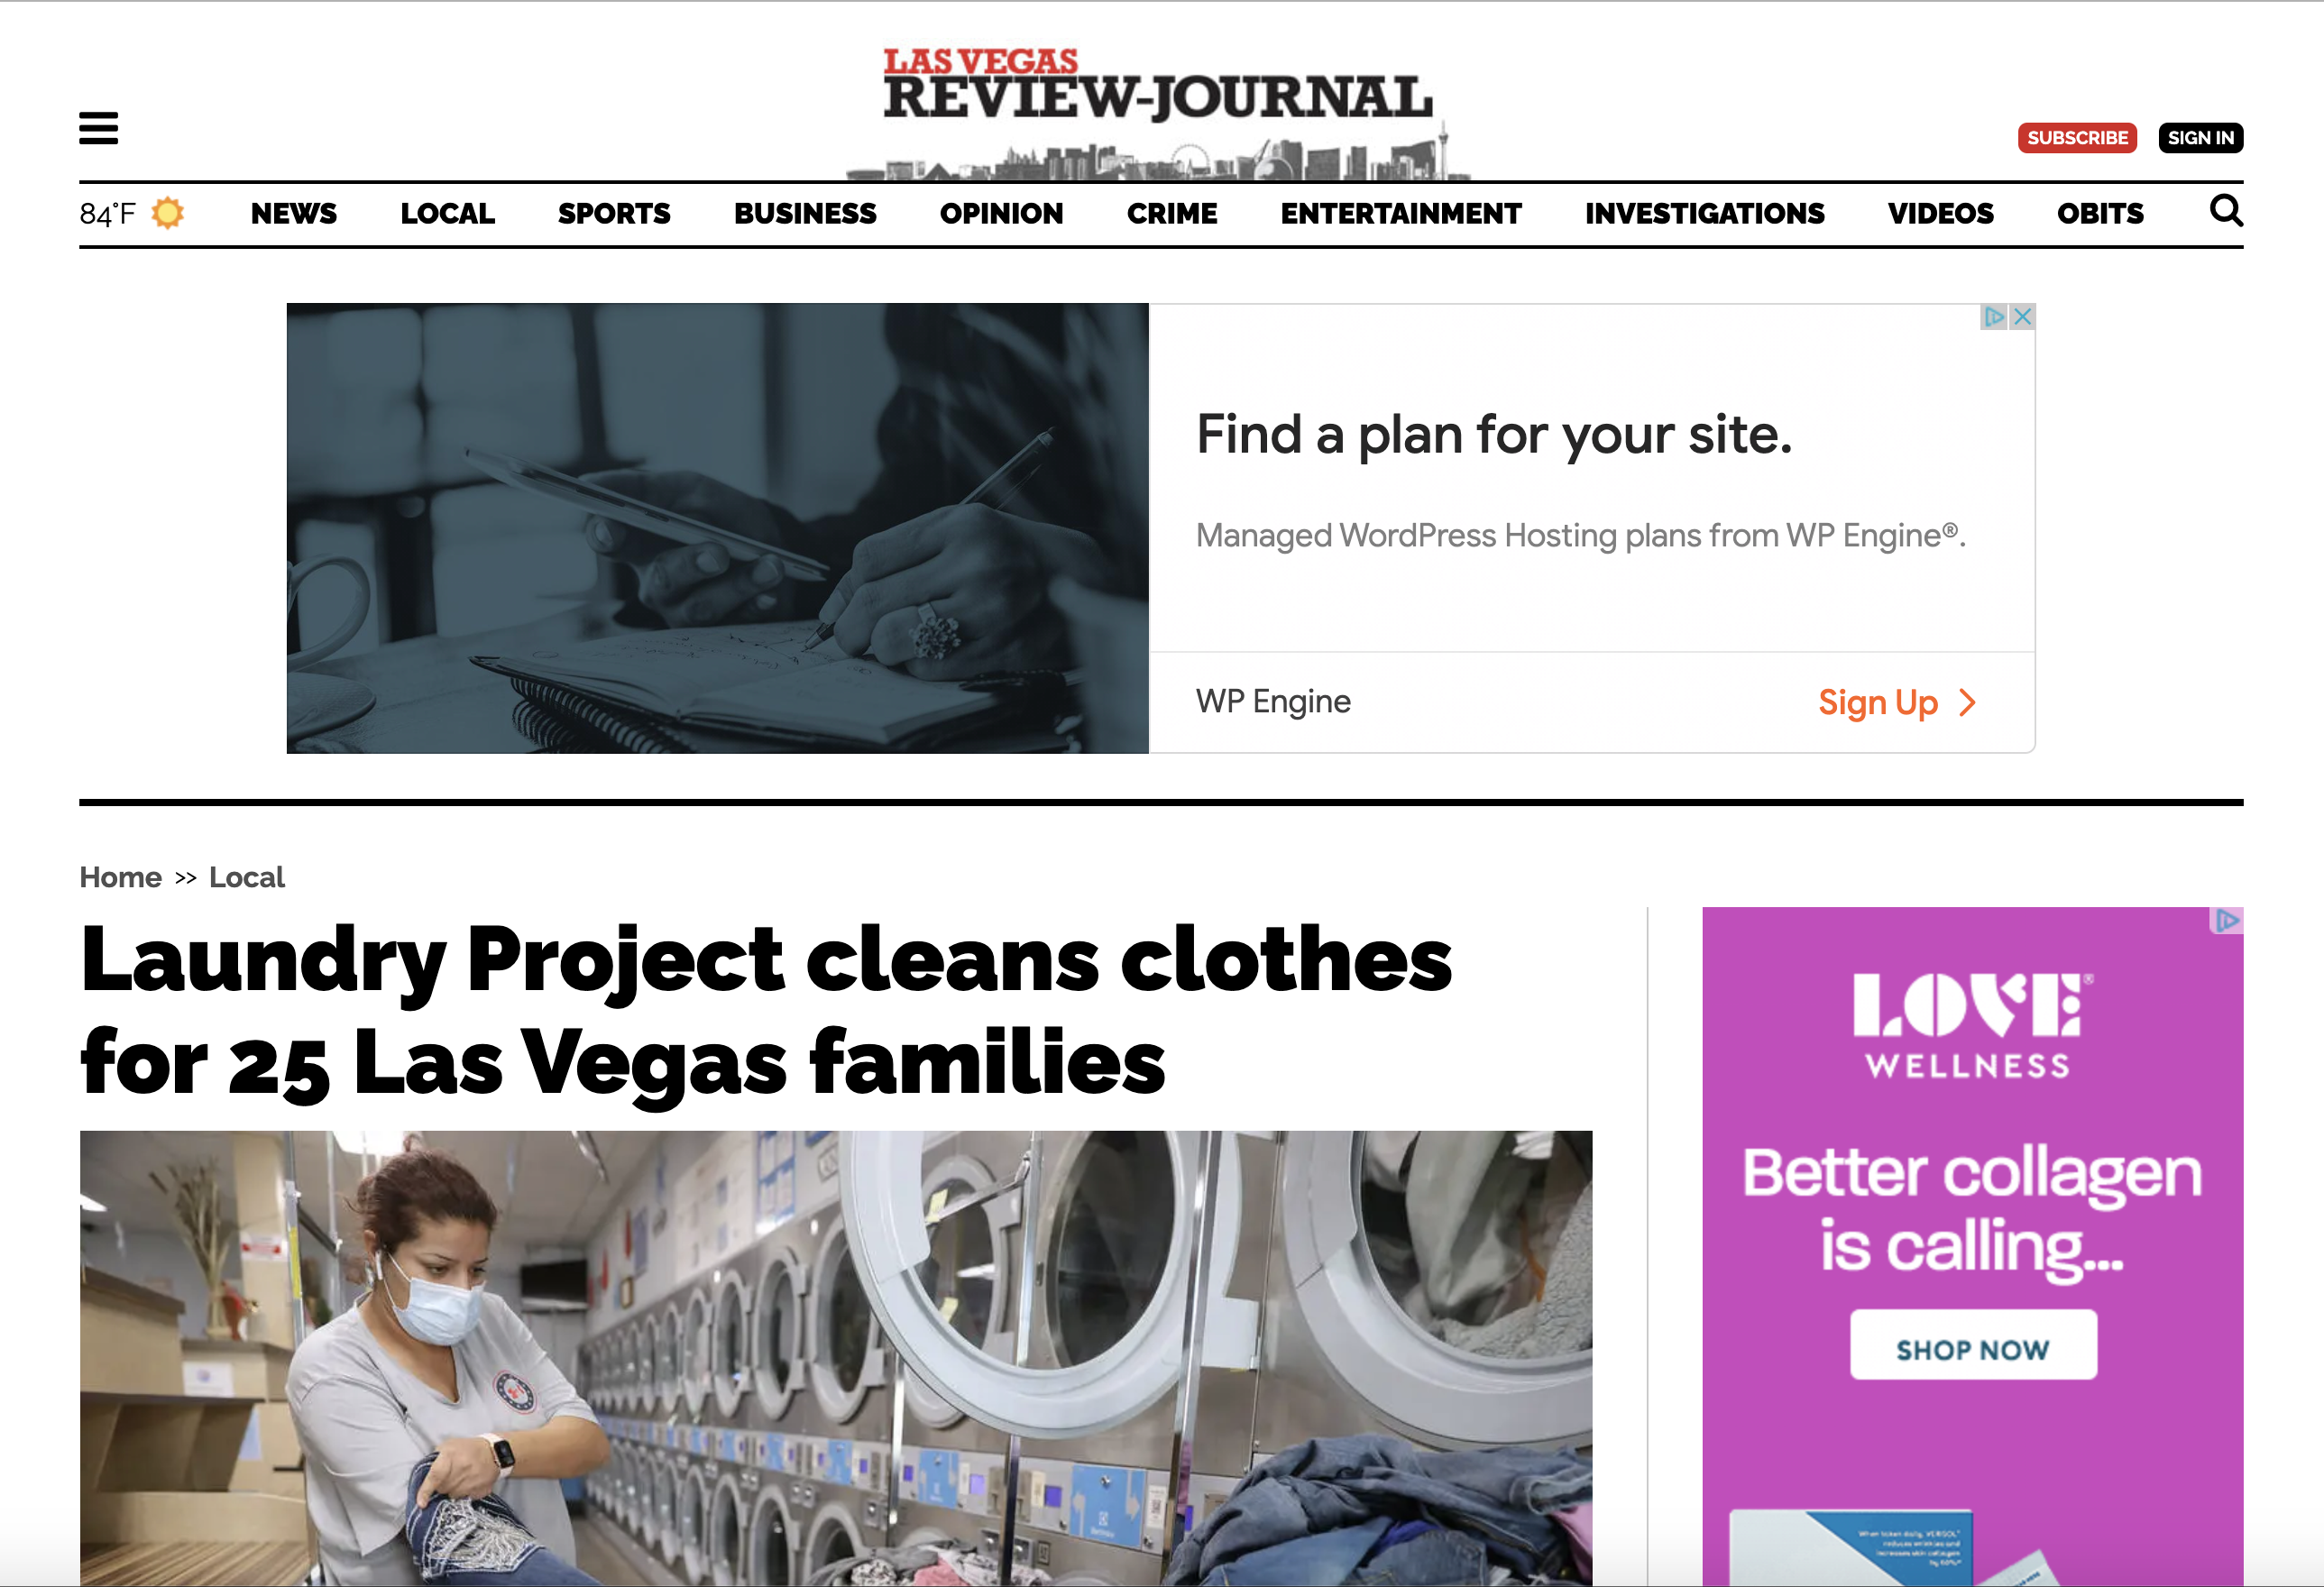 Las Vegas Review-Journal – Laundry Project